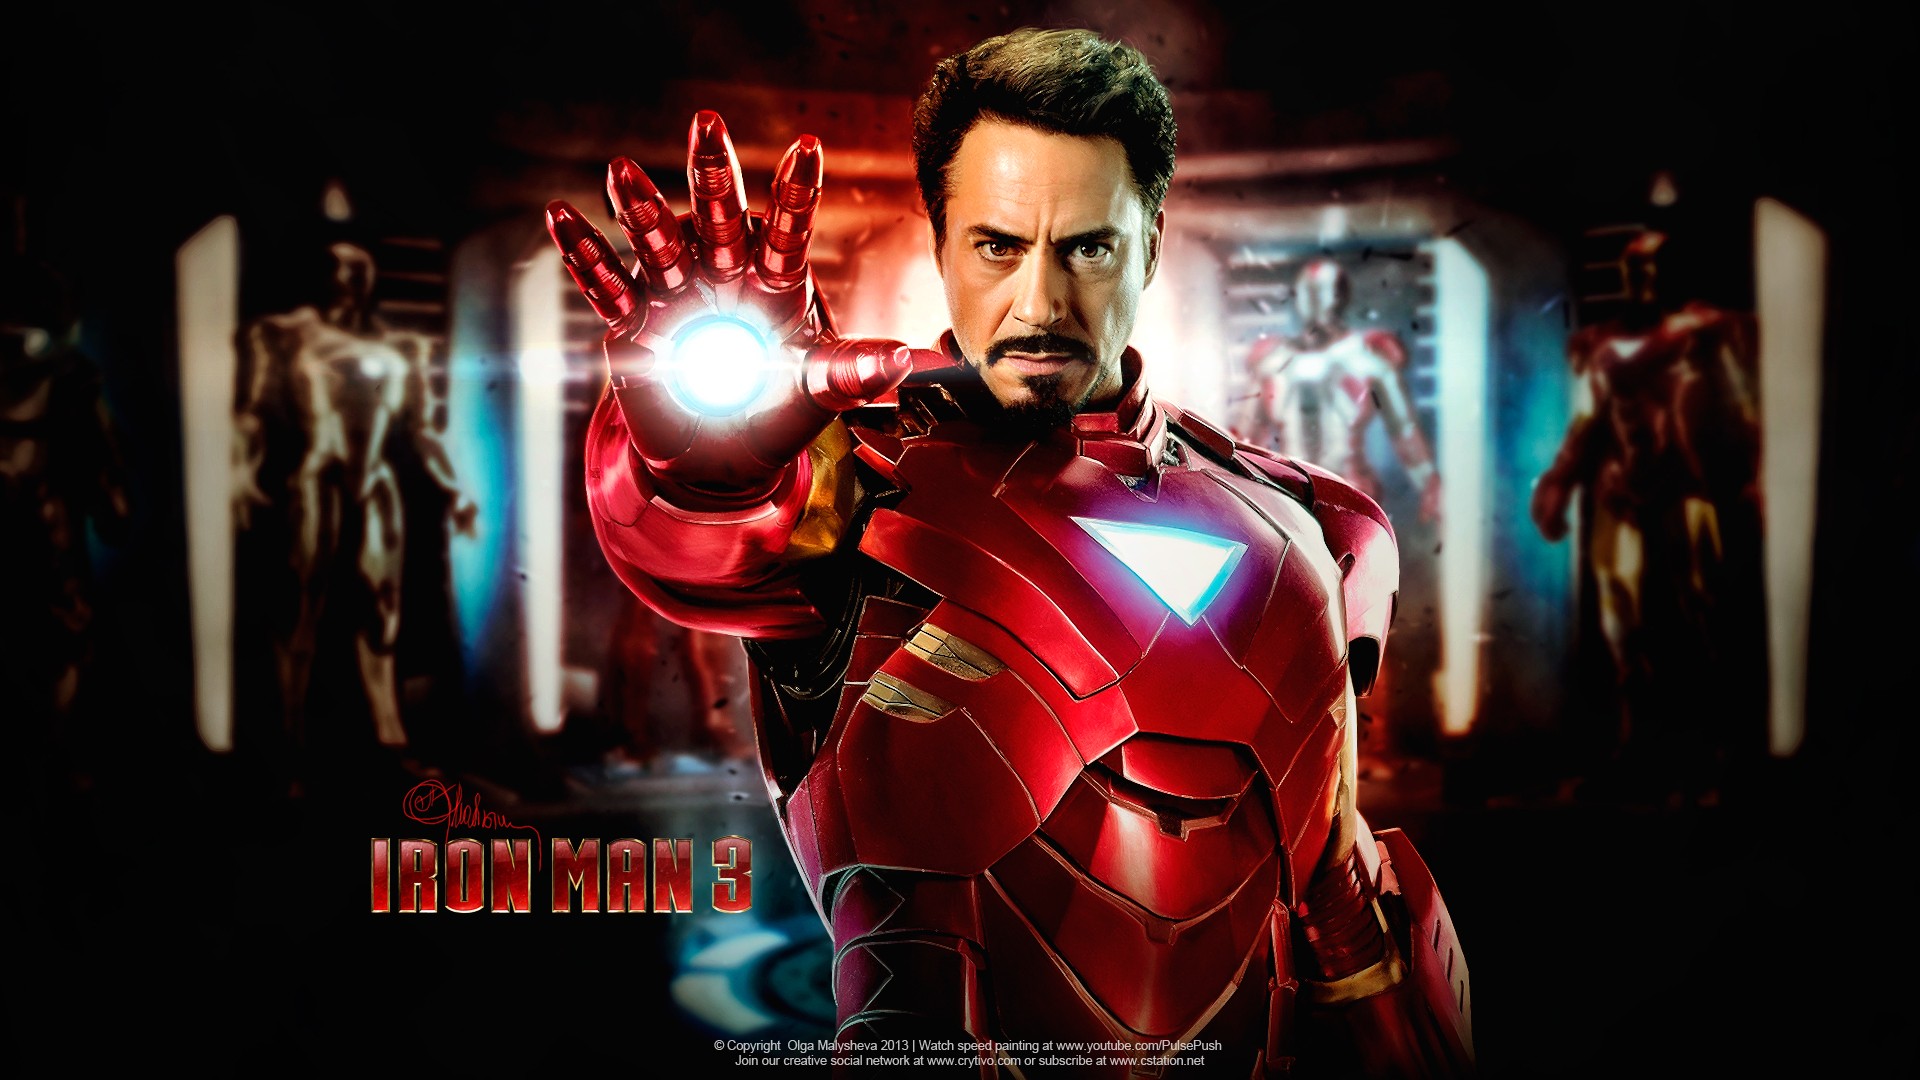 Iron Man 3 movies comics w wallpaper 1920x1080 86063 WallpaperUP